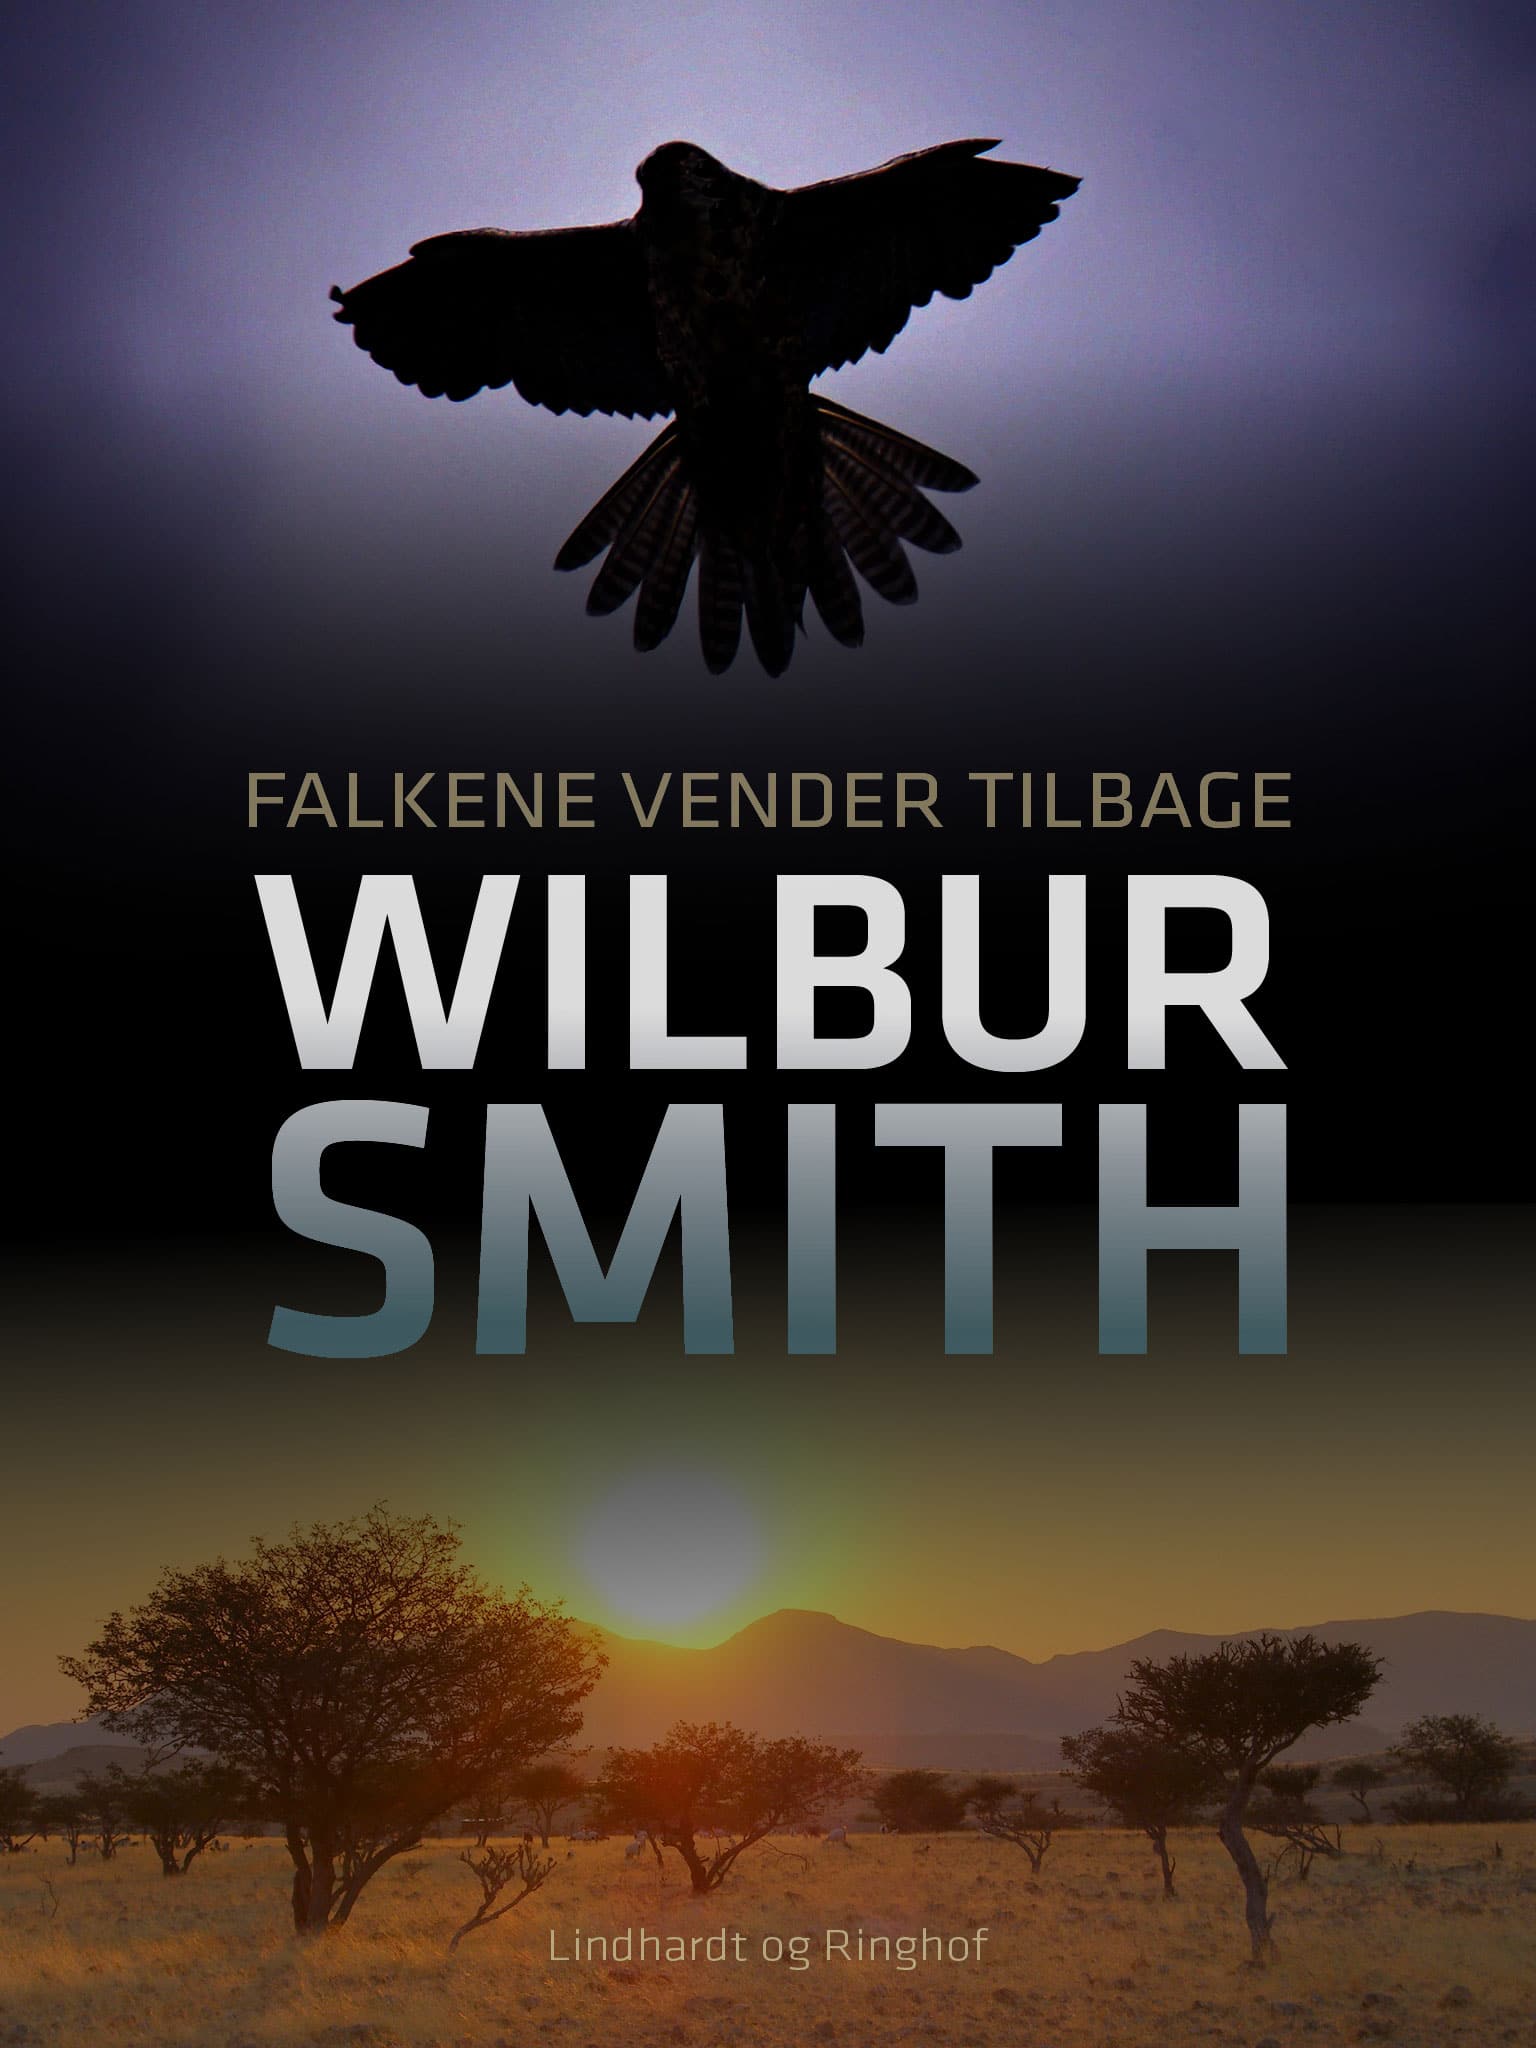 Falkene vender tilbage, Wilbur Smith, Ballantyne, Ballantyne-serien